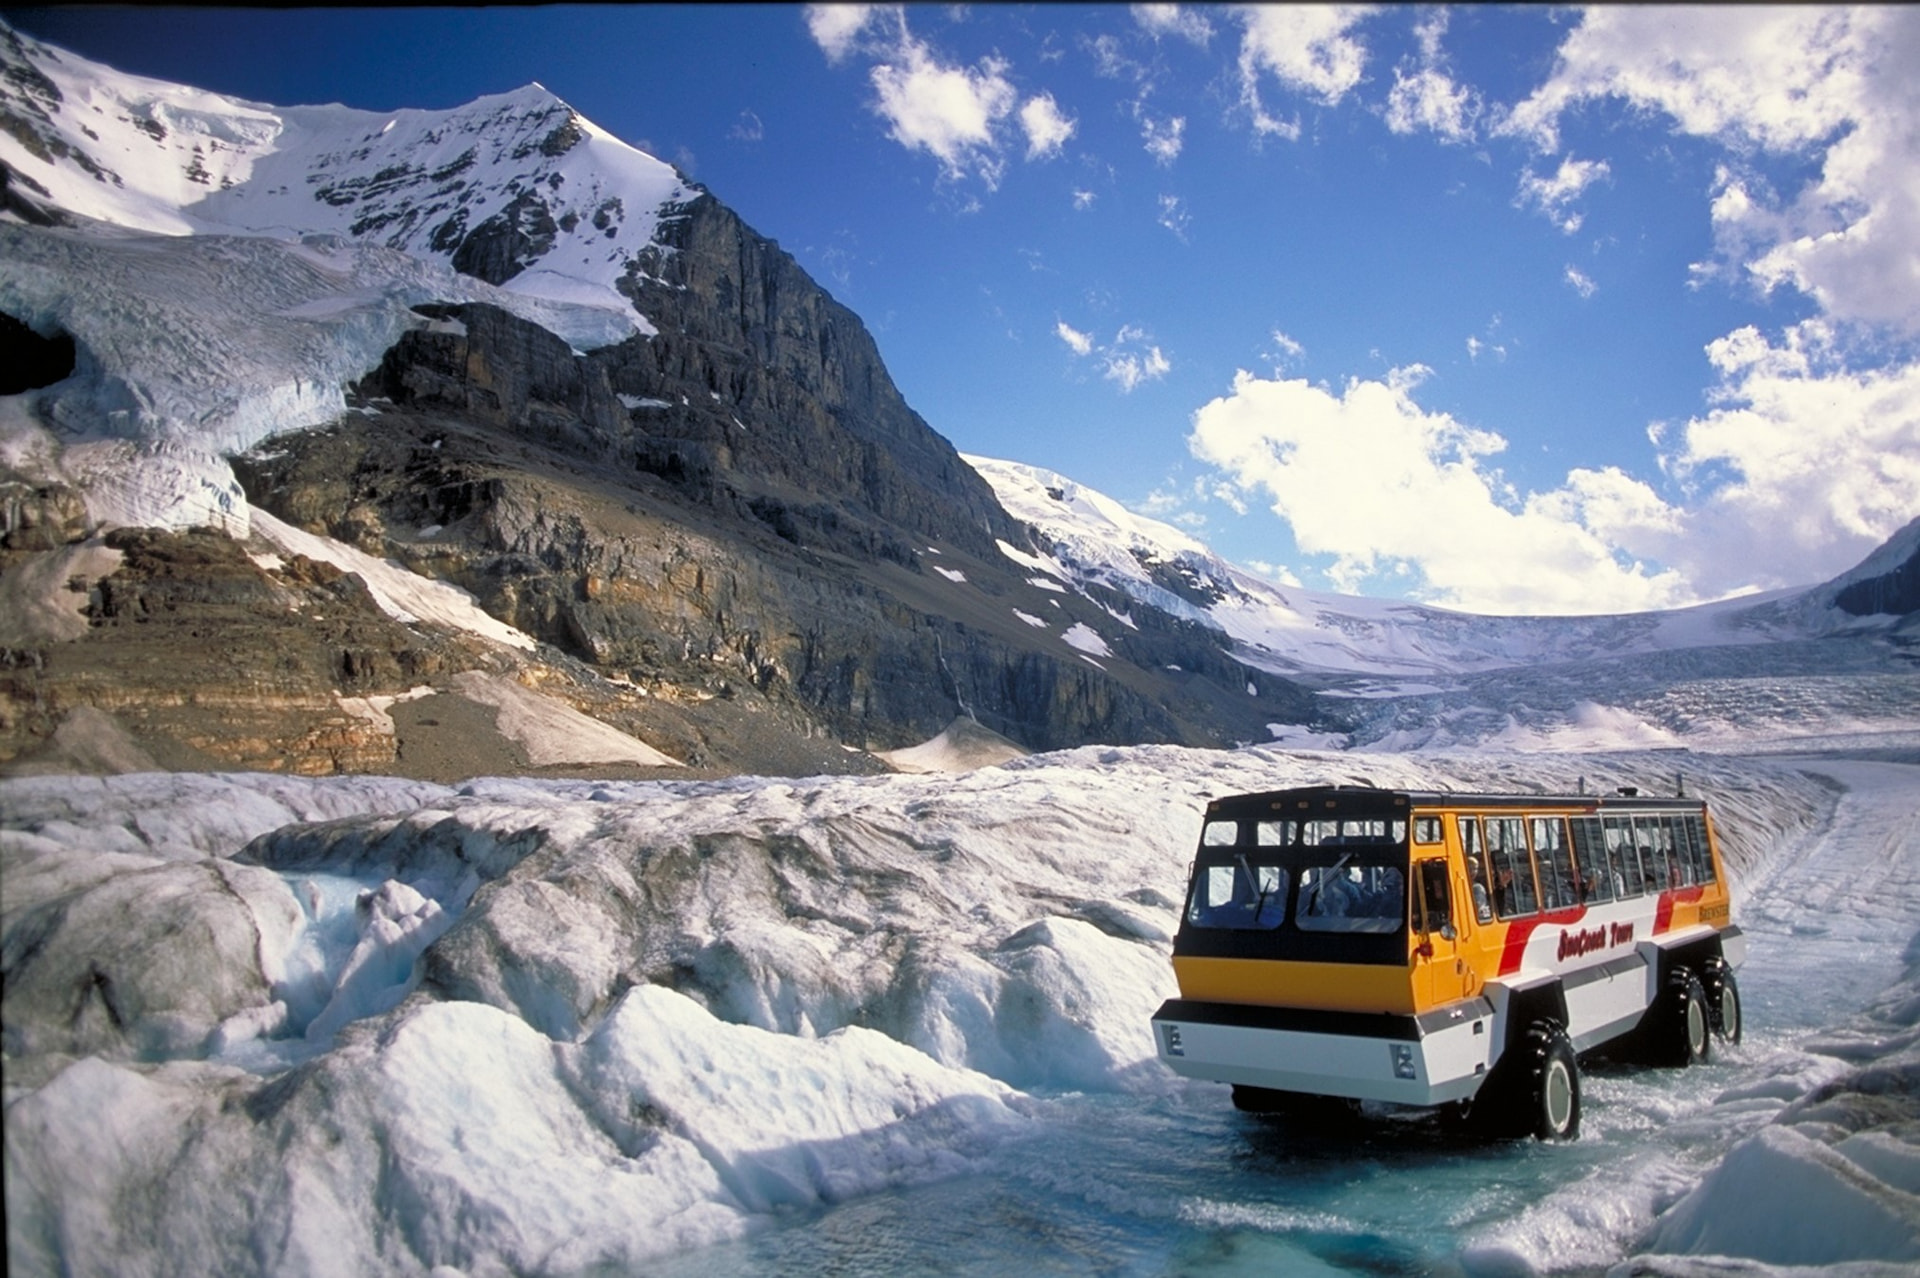 Columbian Ice fields with Ice Explorer Ride